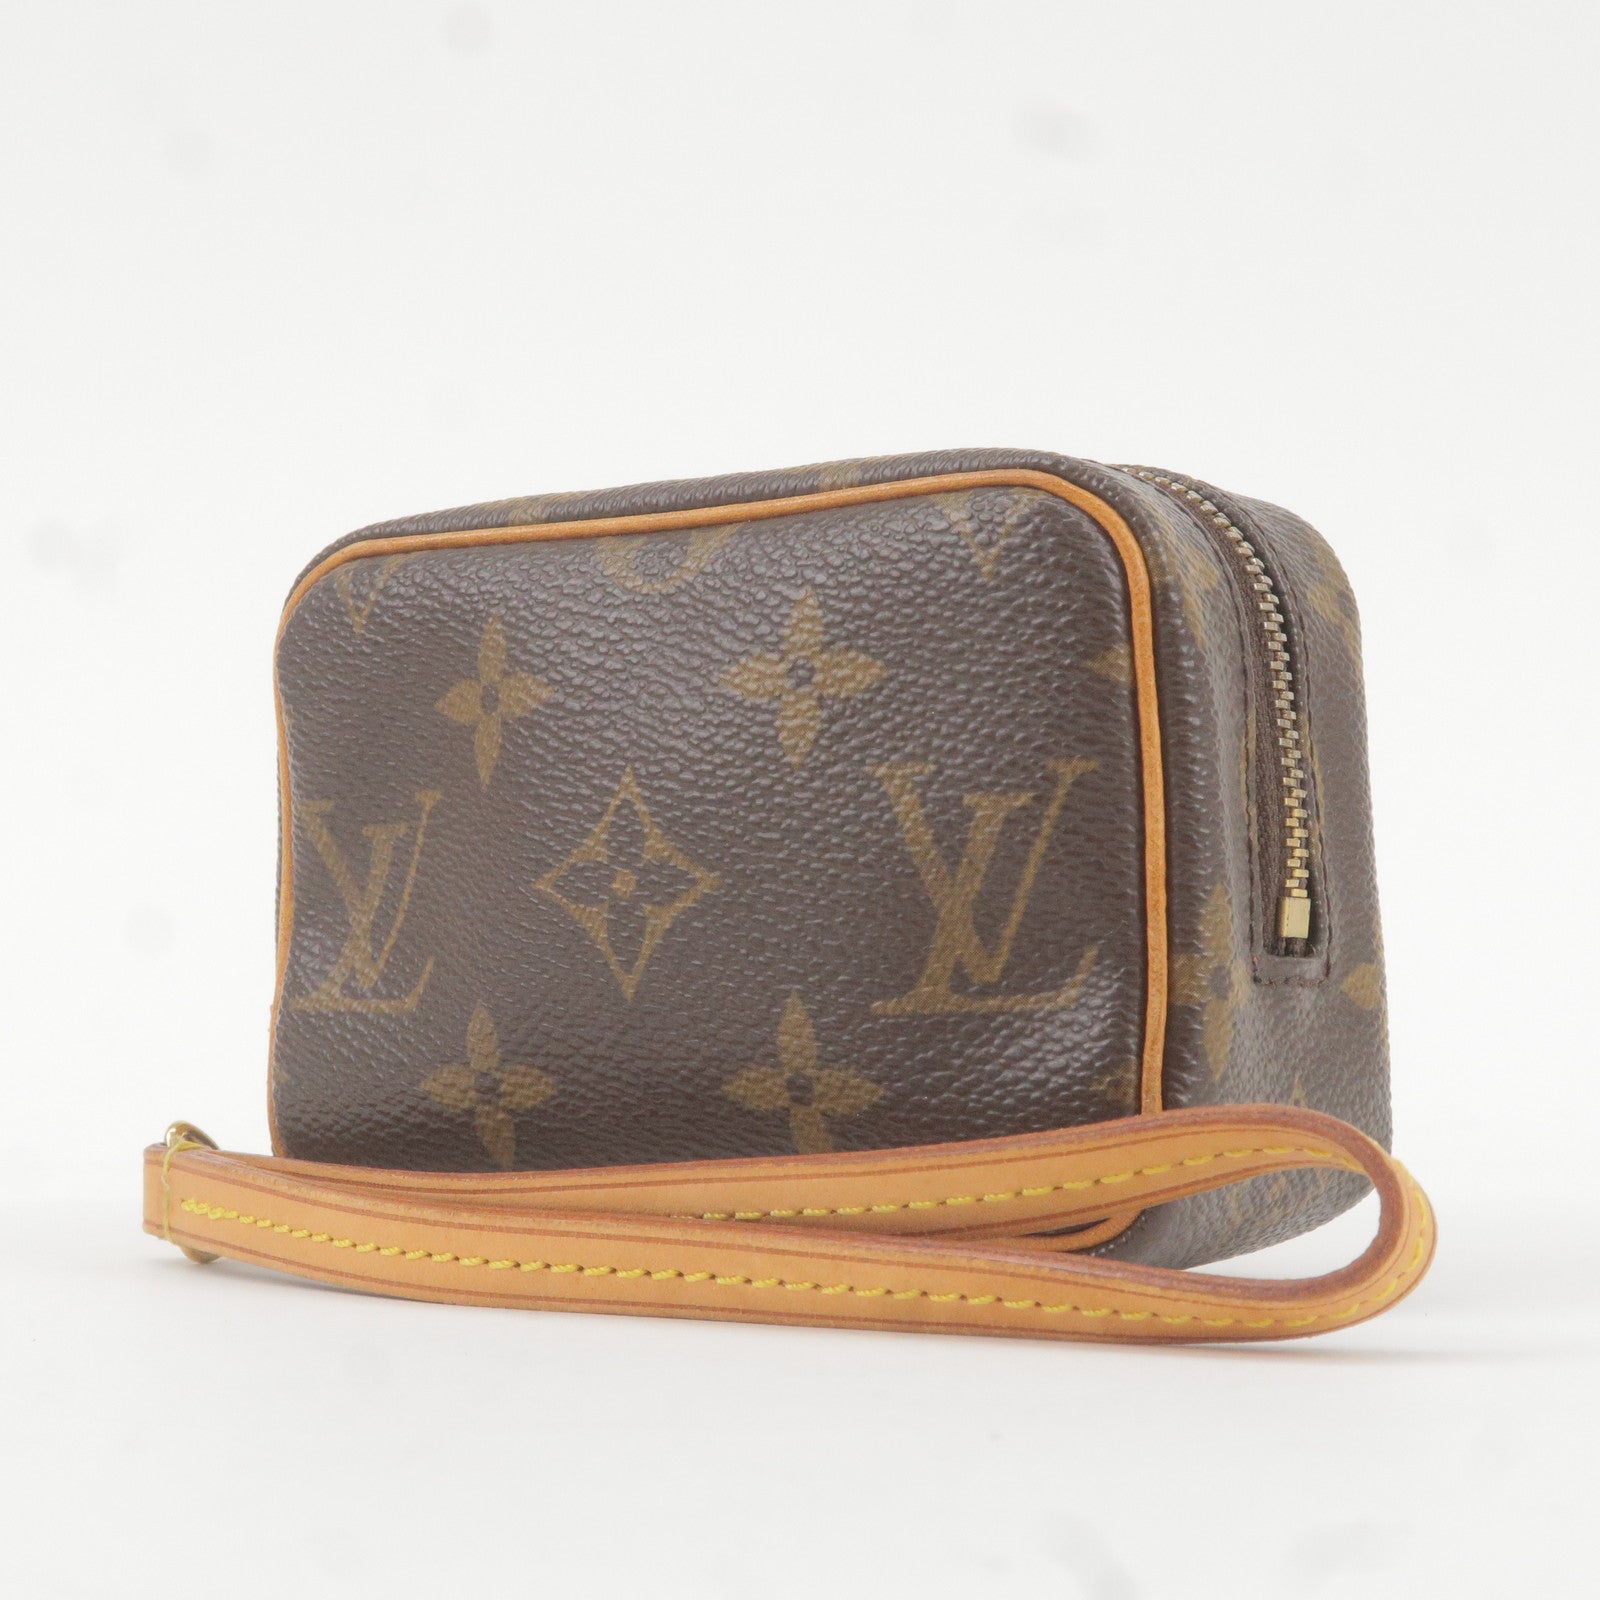 Louis Vuitton Monogram Trousse Wapity Pouch Wristlet Cosmetic